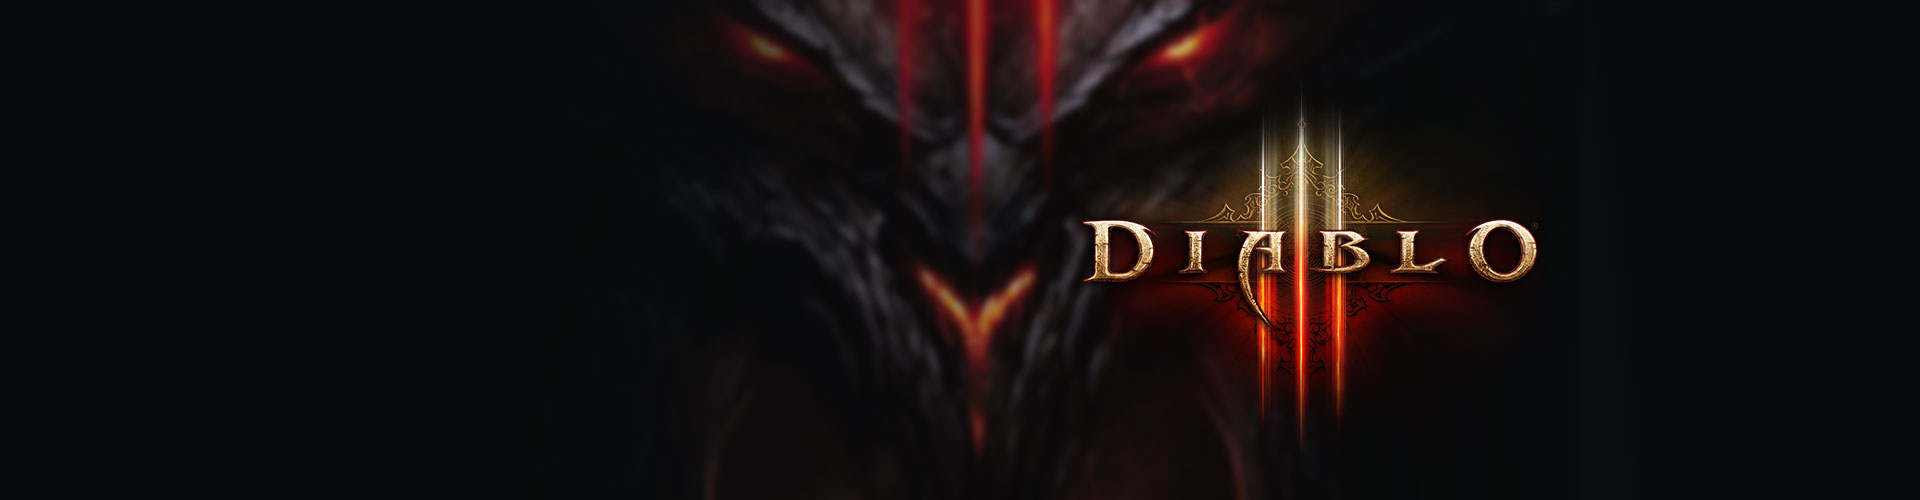 Configuration Diablo 3 PC